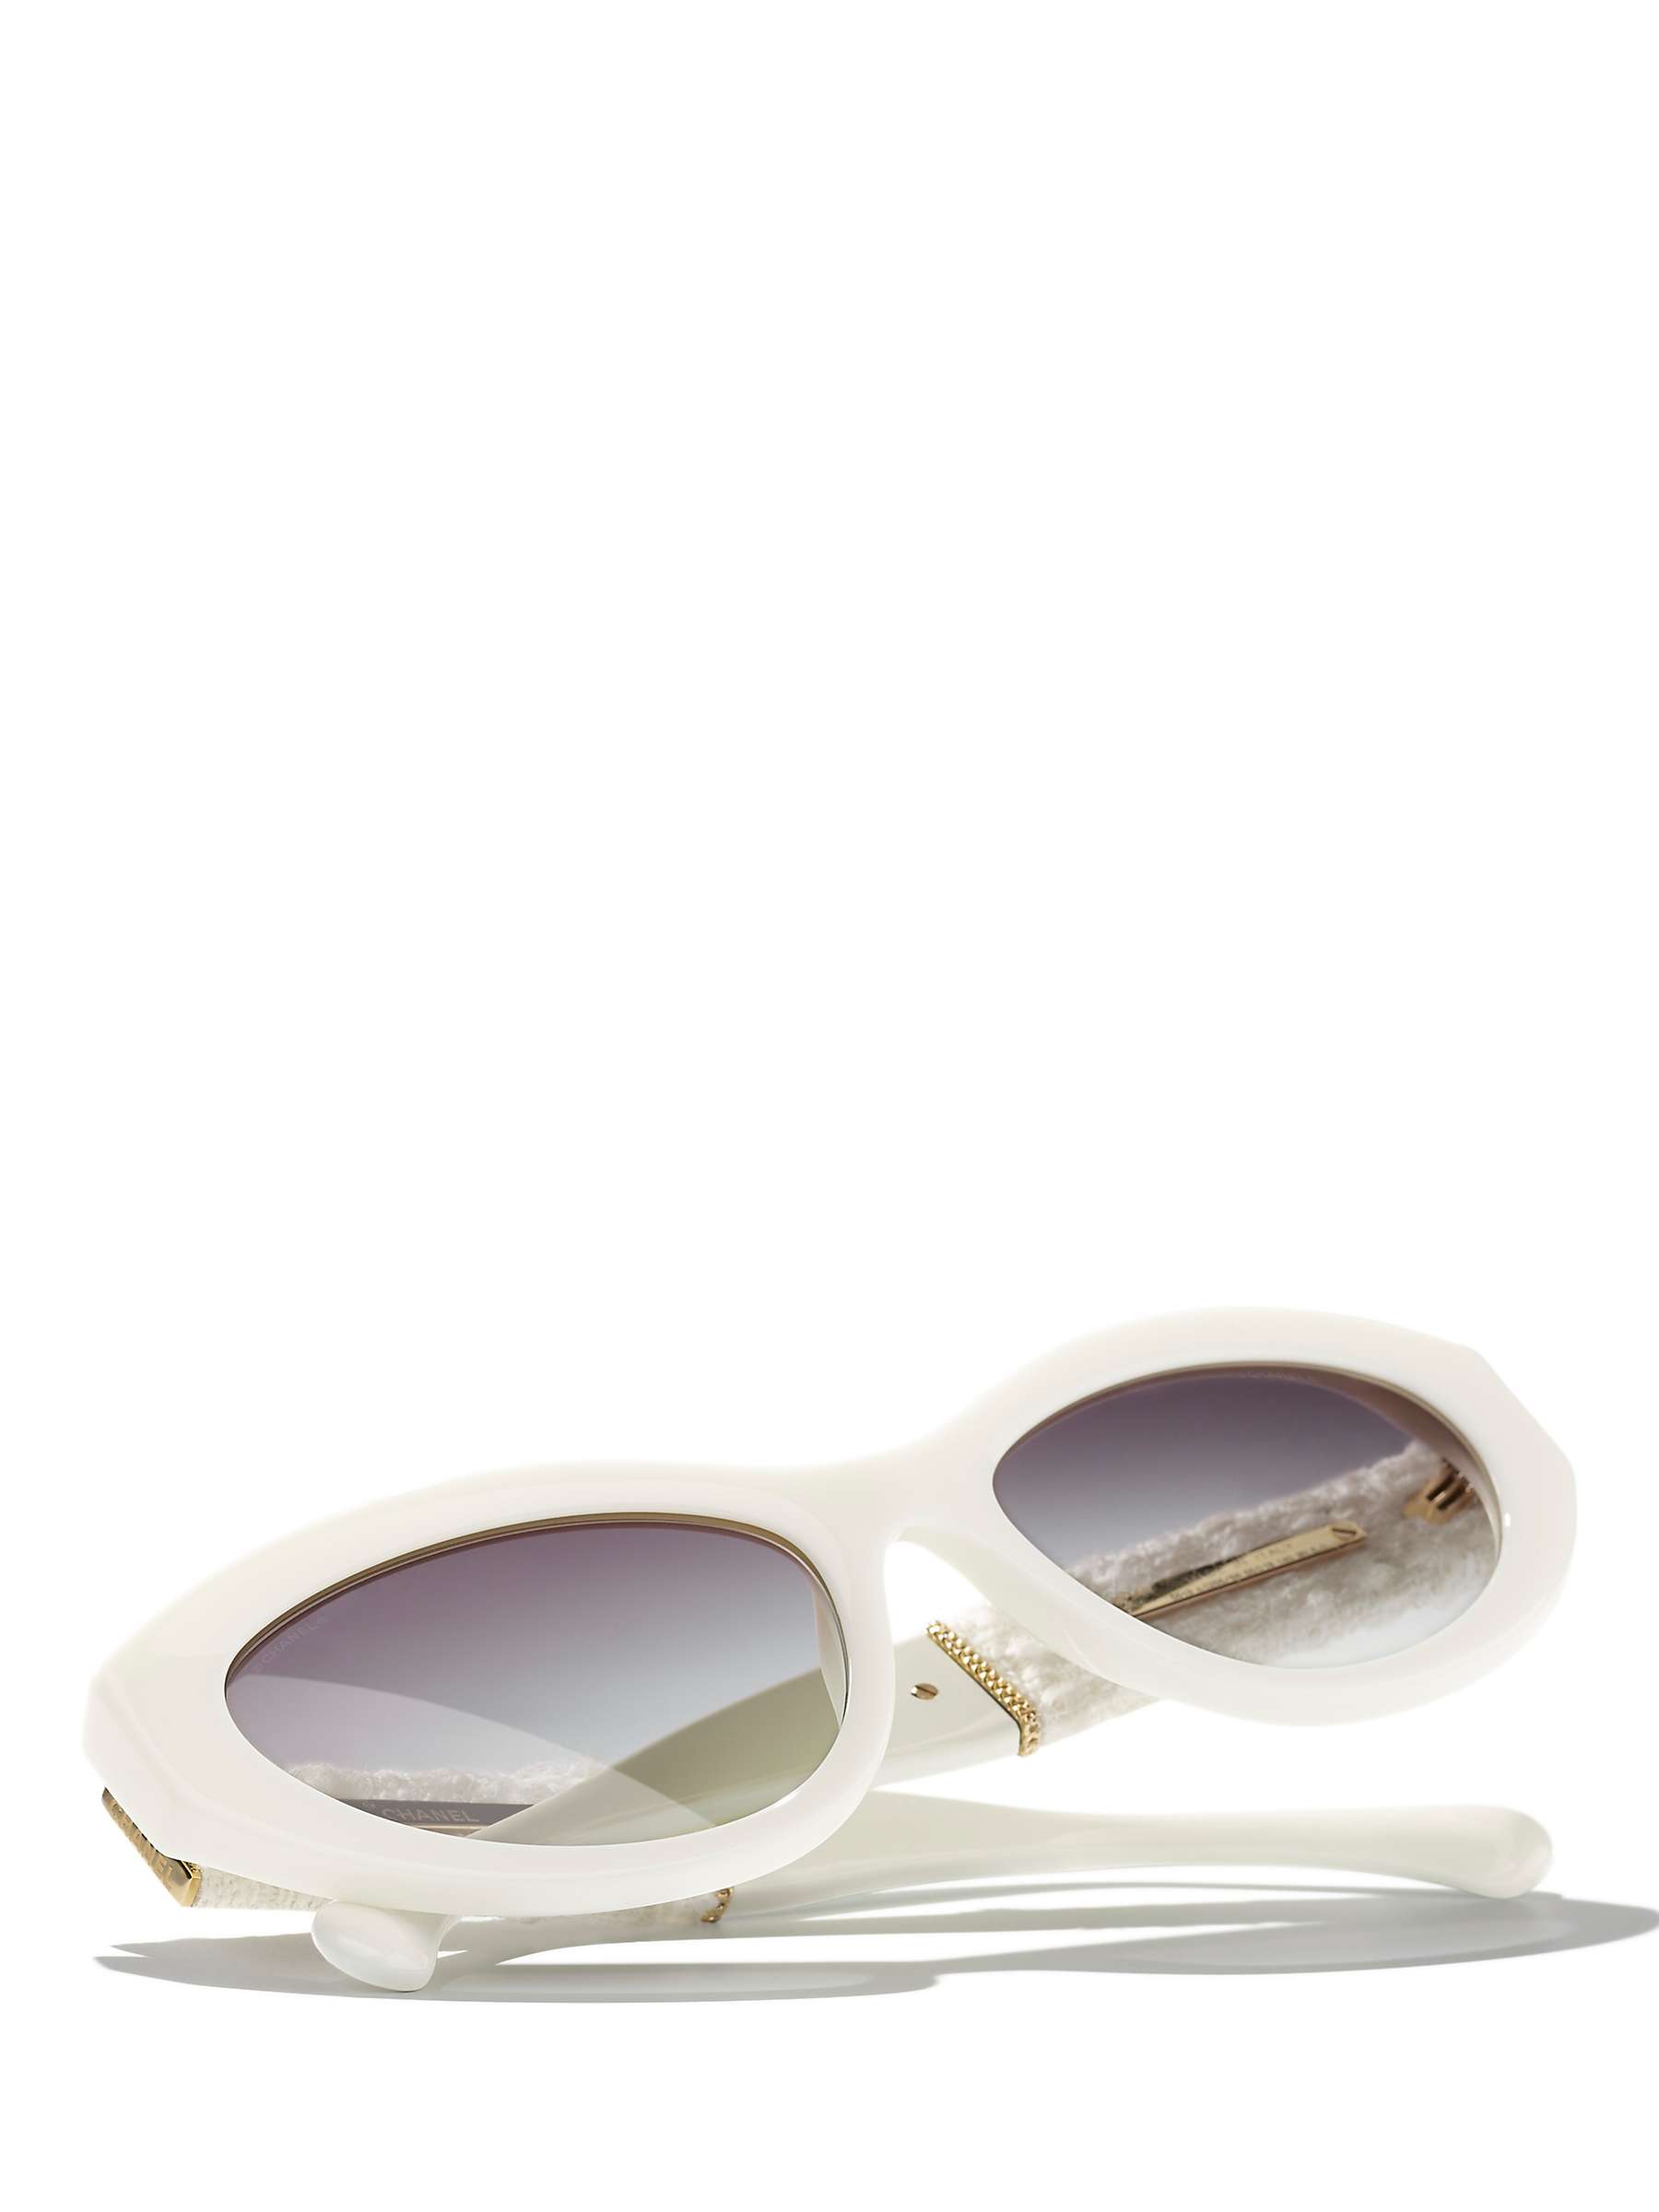 Buy CHANEL Cat Eye Sunglasses CH5513 White/Grey Gradient Online at johnlewis.com